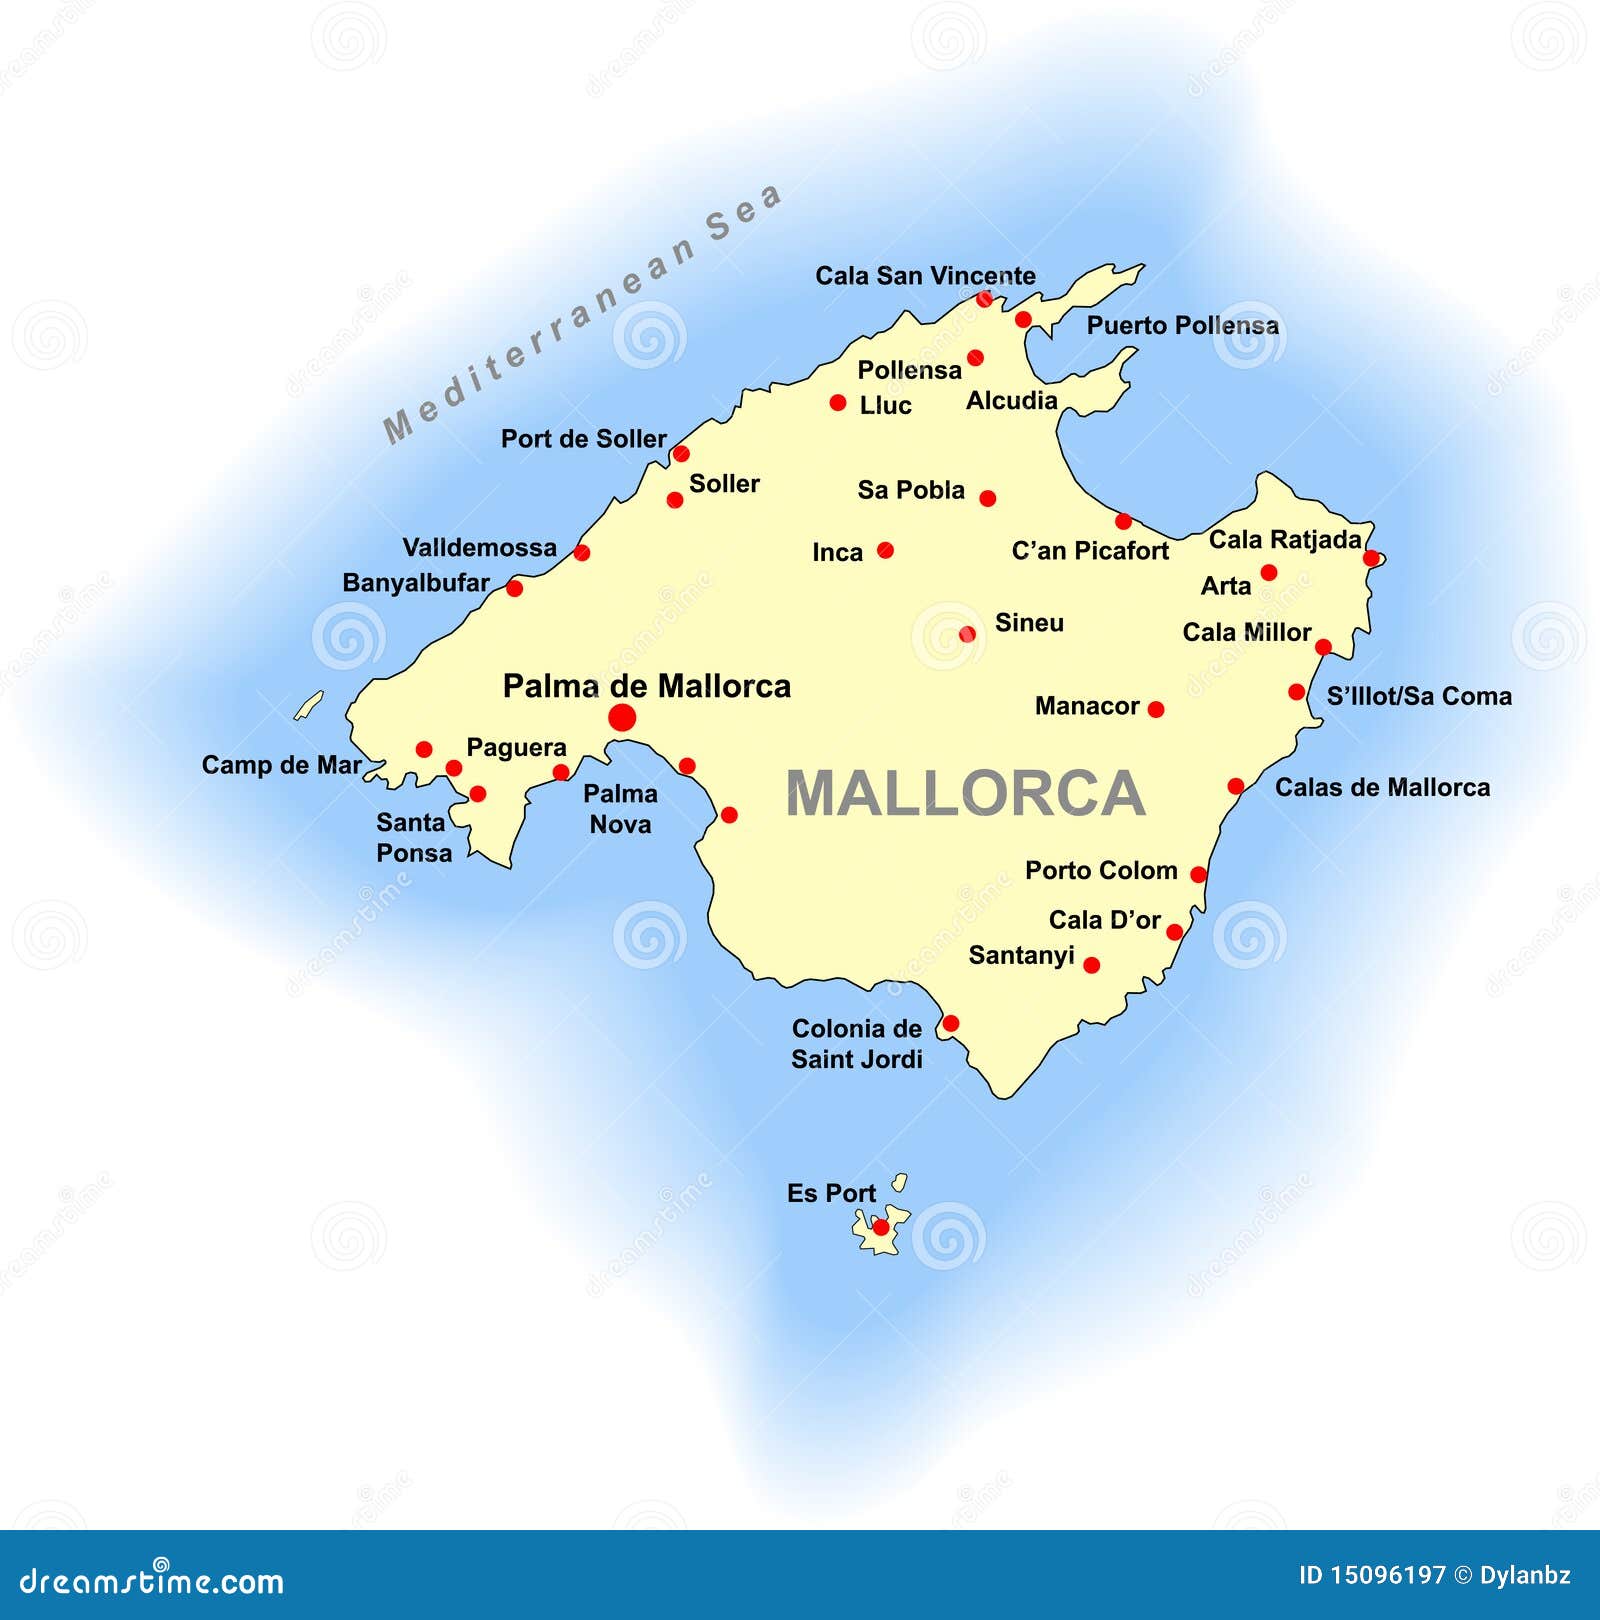 Mallorca Map Stock Vector. Illustration Of Pollenca, Palm - 15096197